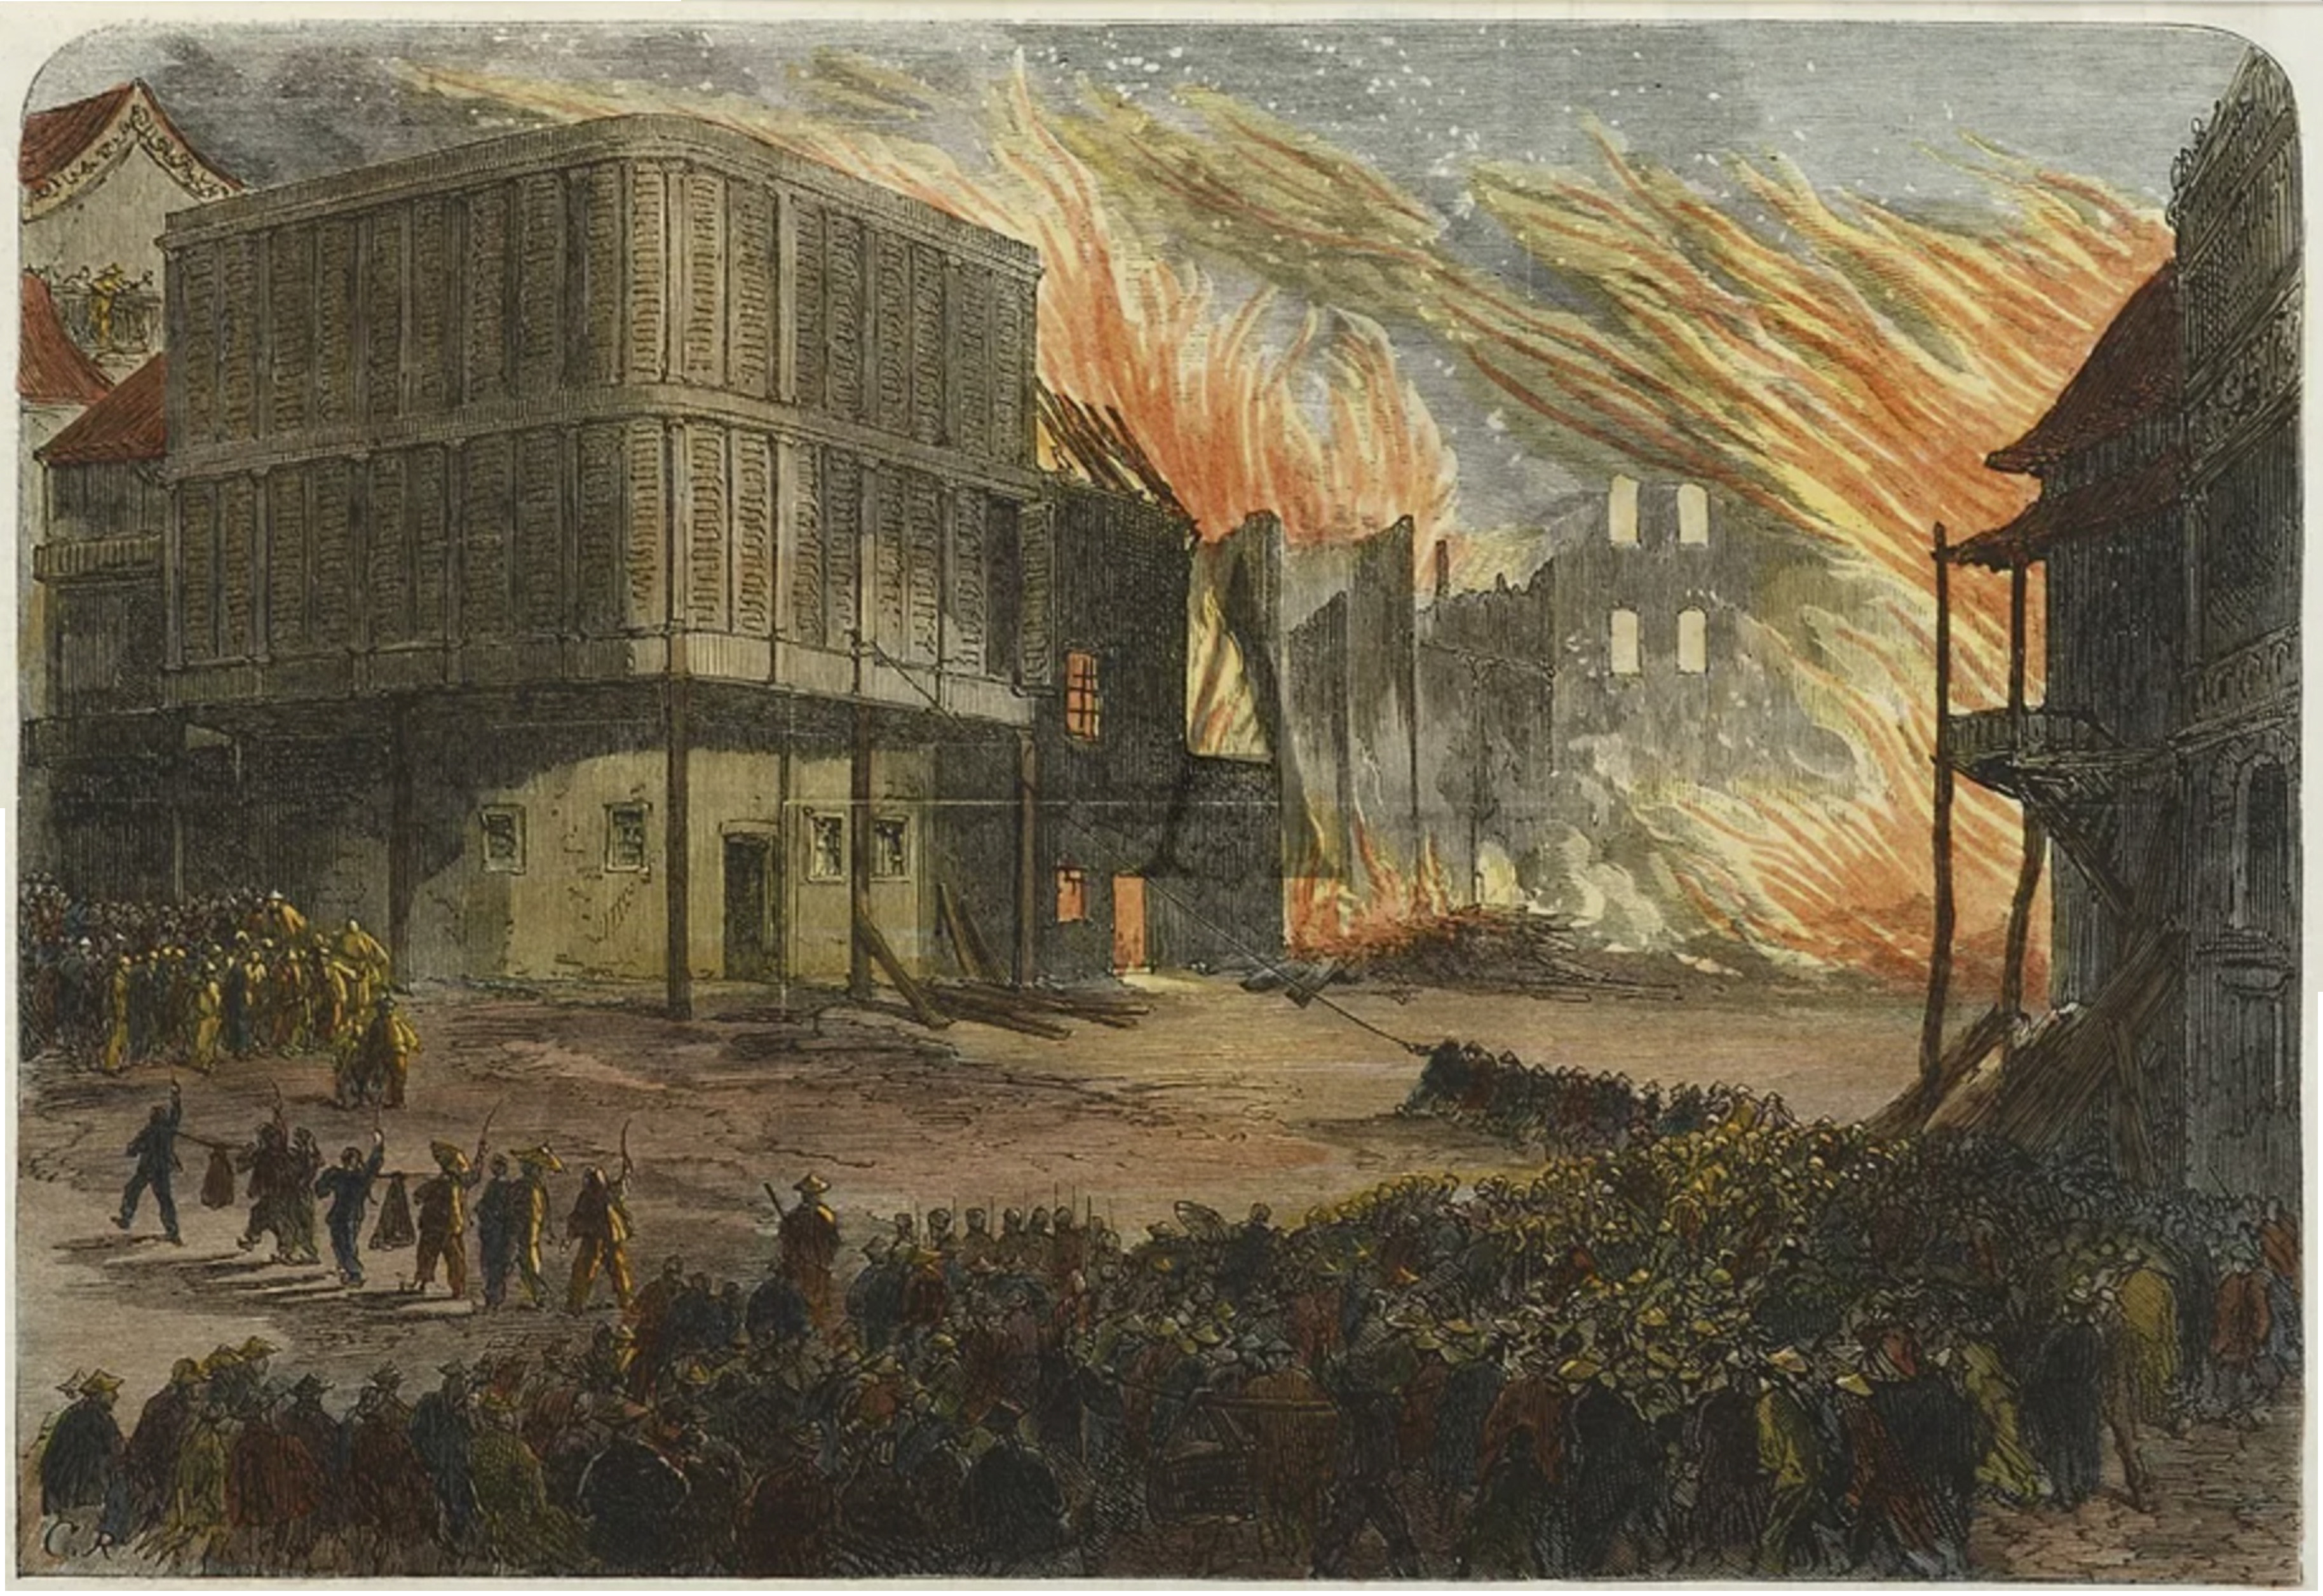 C1866&#xA;Great Fire at Hong-Kong&#xA;&#xA;From the original edition of the Illustrated London News.&#xA;&#xA;Artist unknown